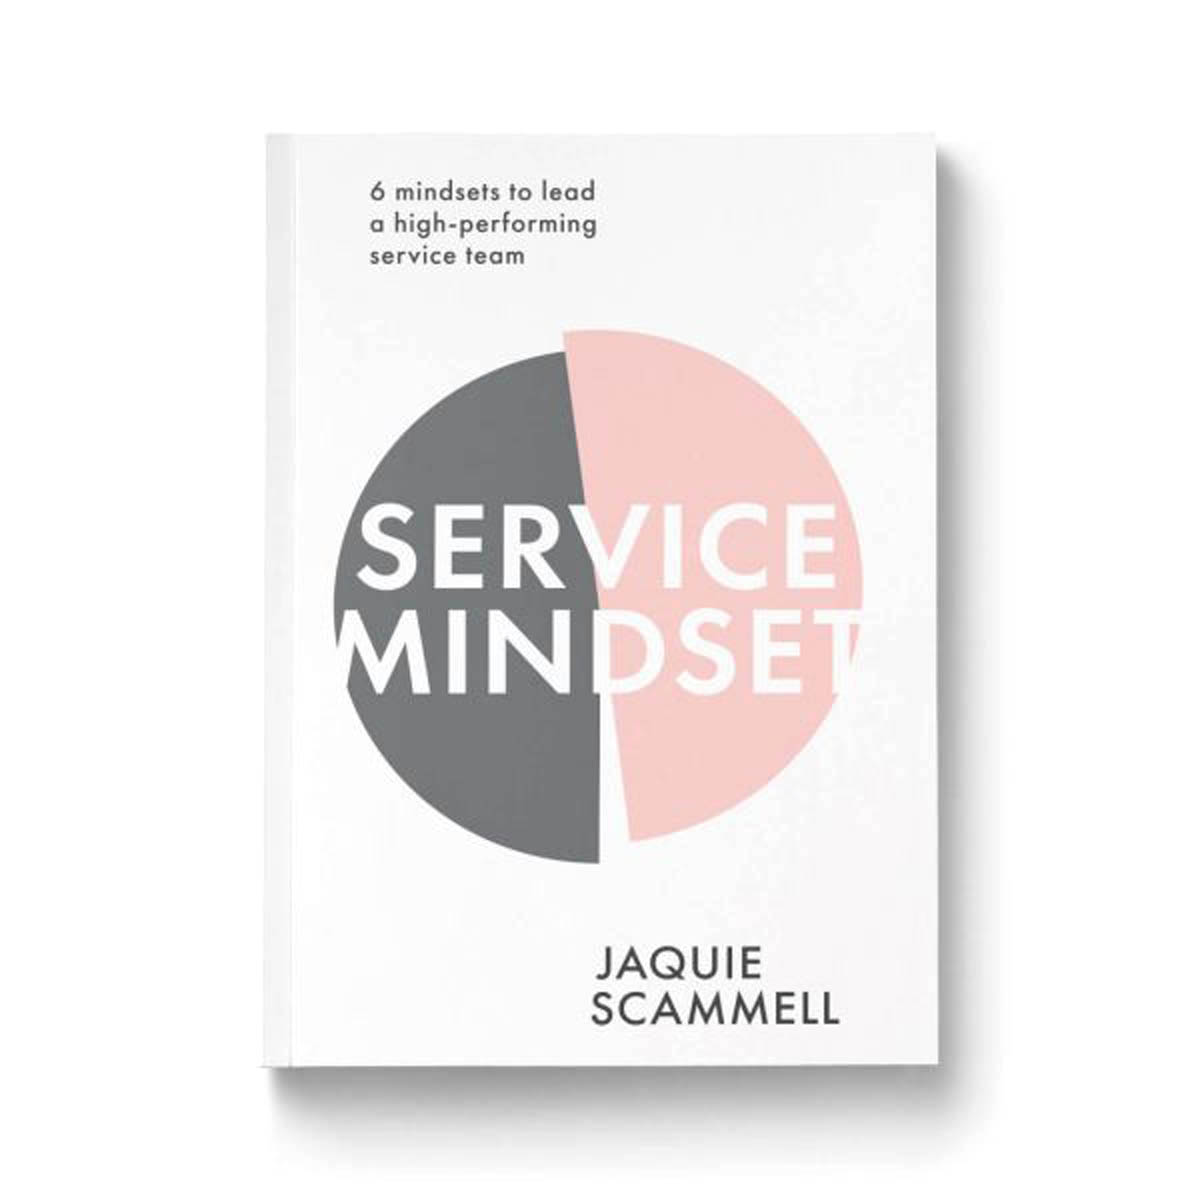 The Service Mindset book 